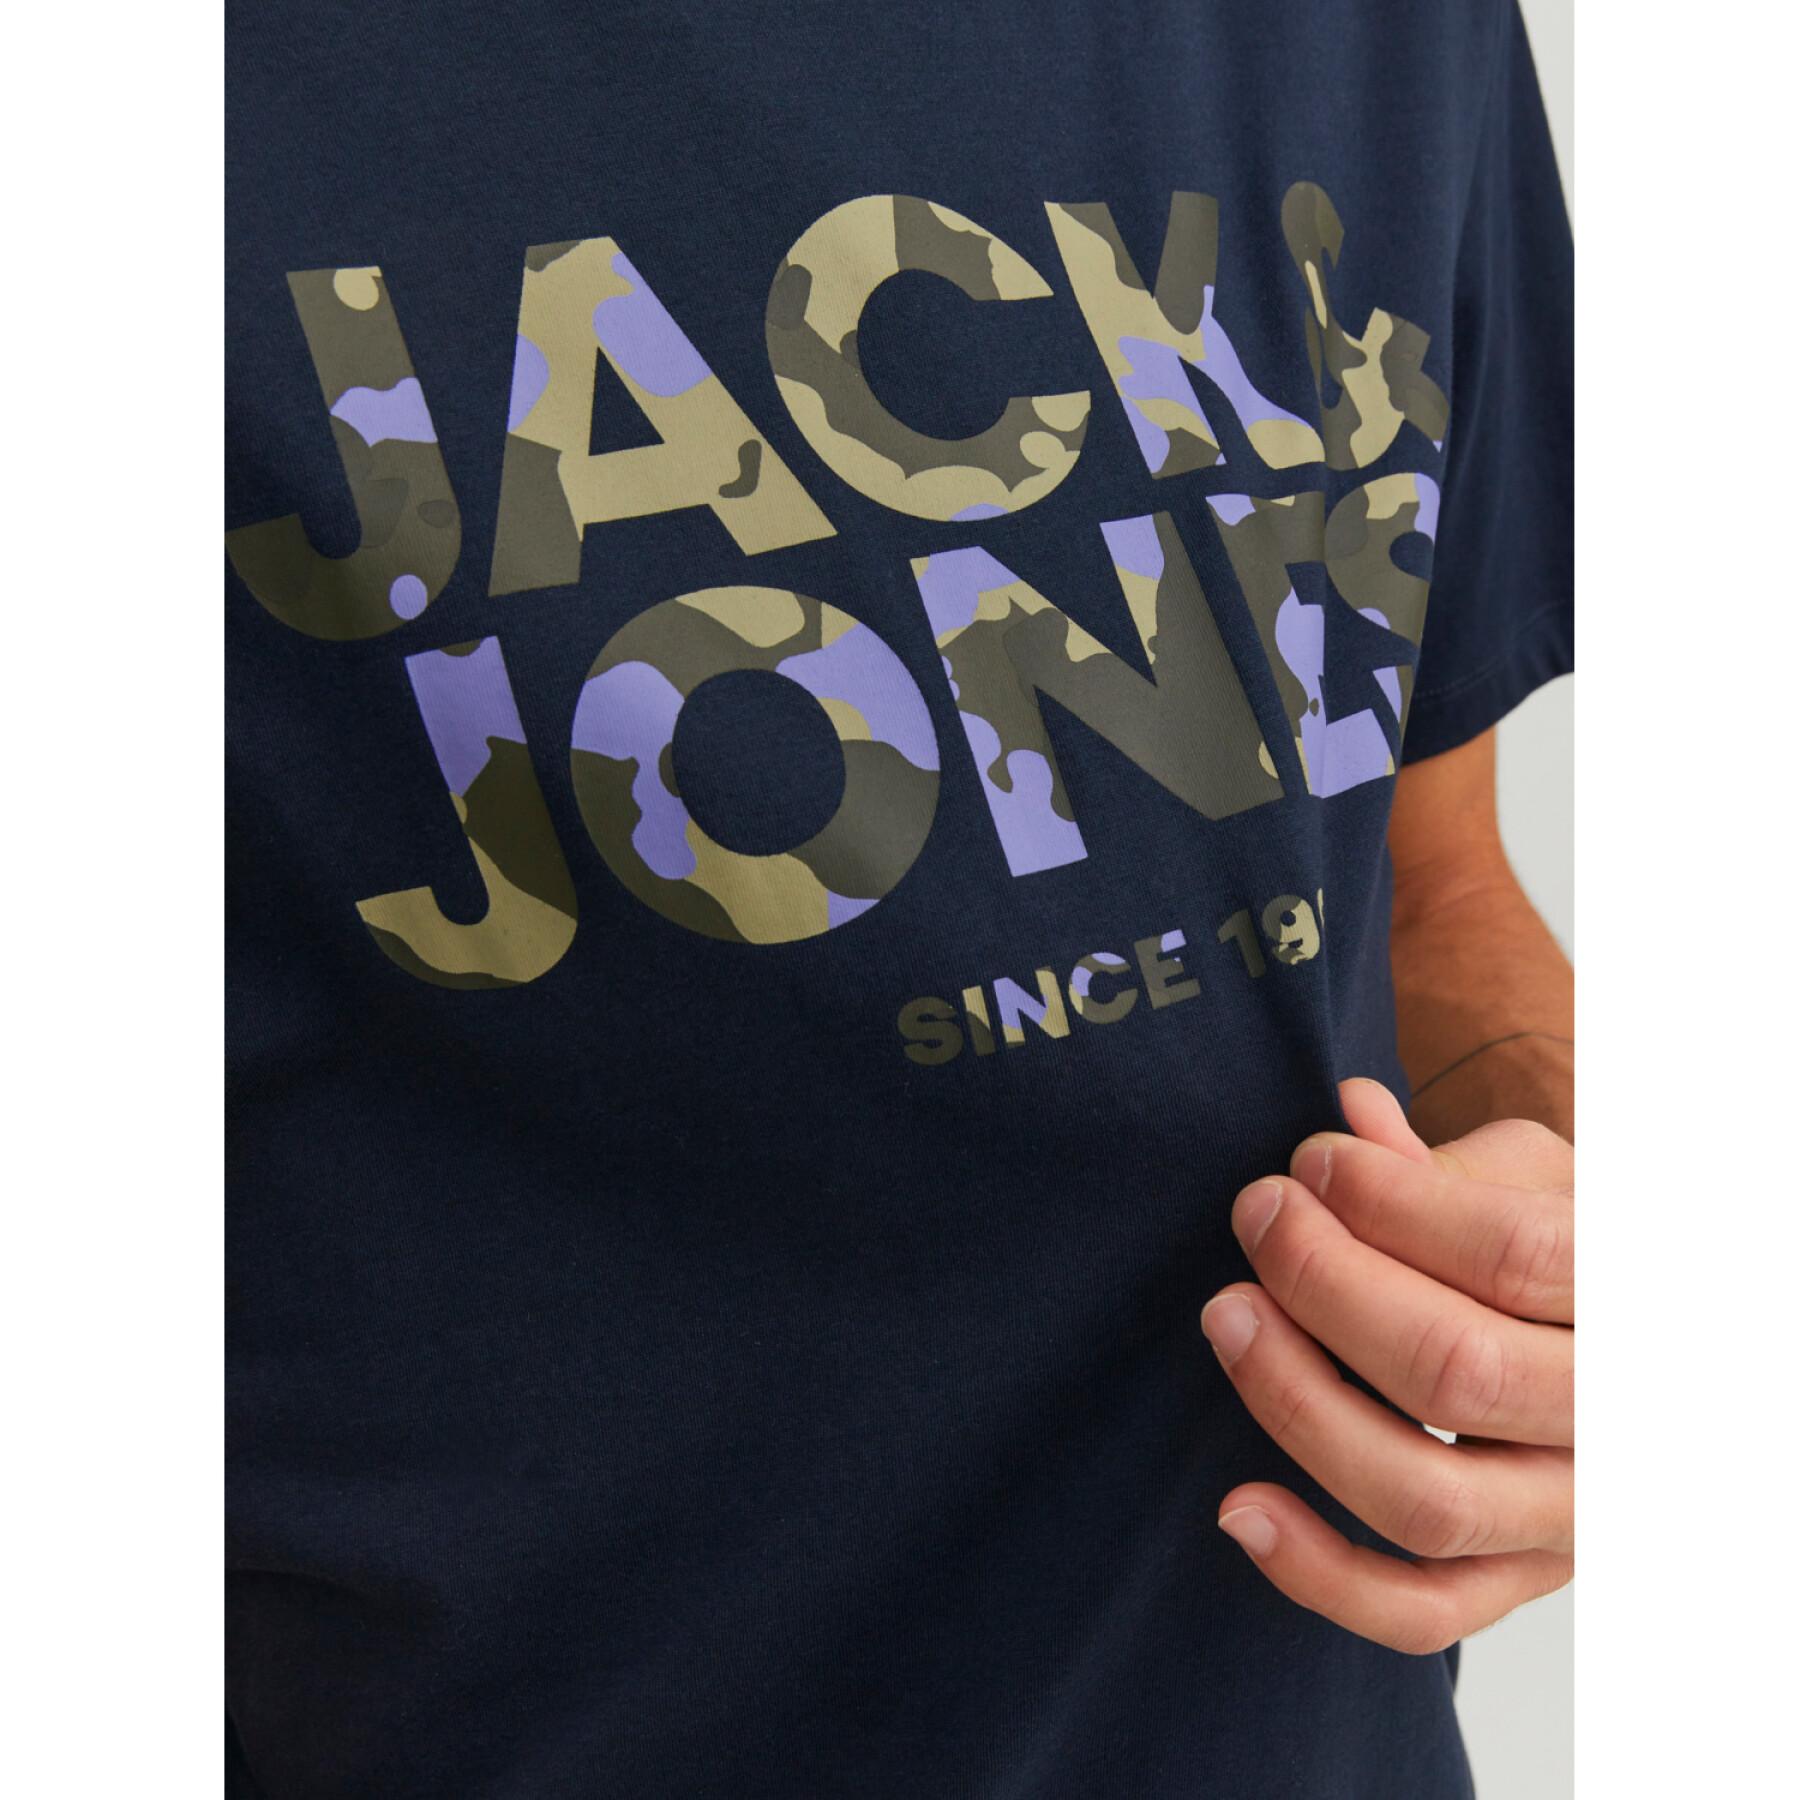 Camiseta de cuello redondo Jack & Jones Jjjames